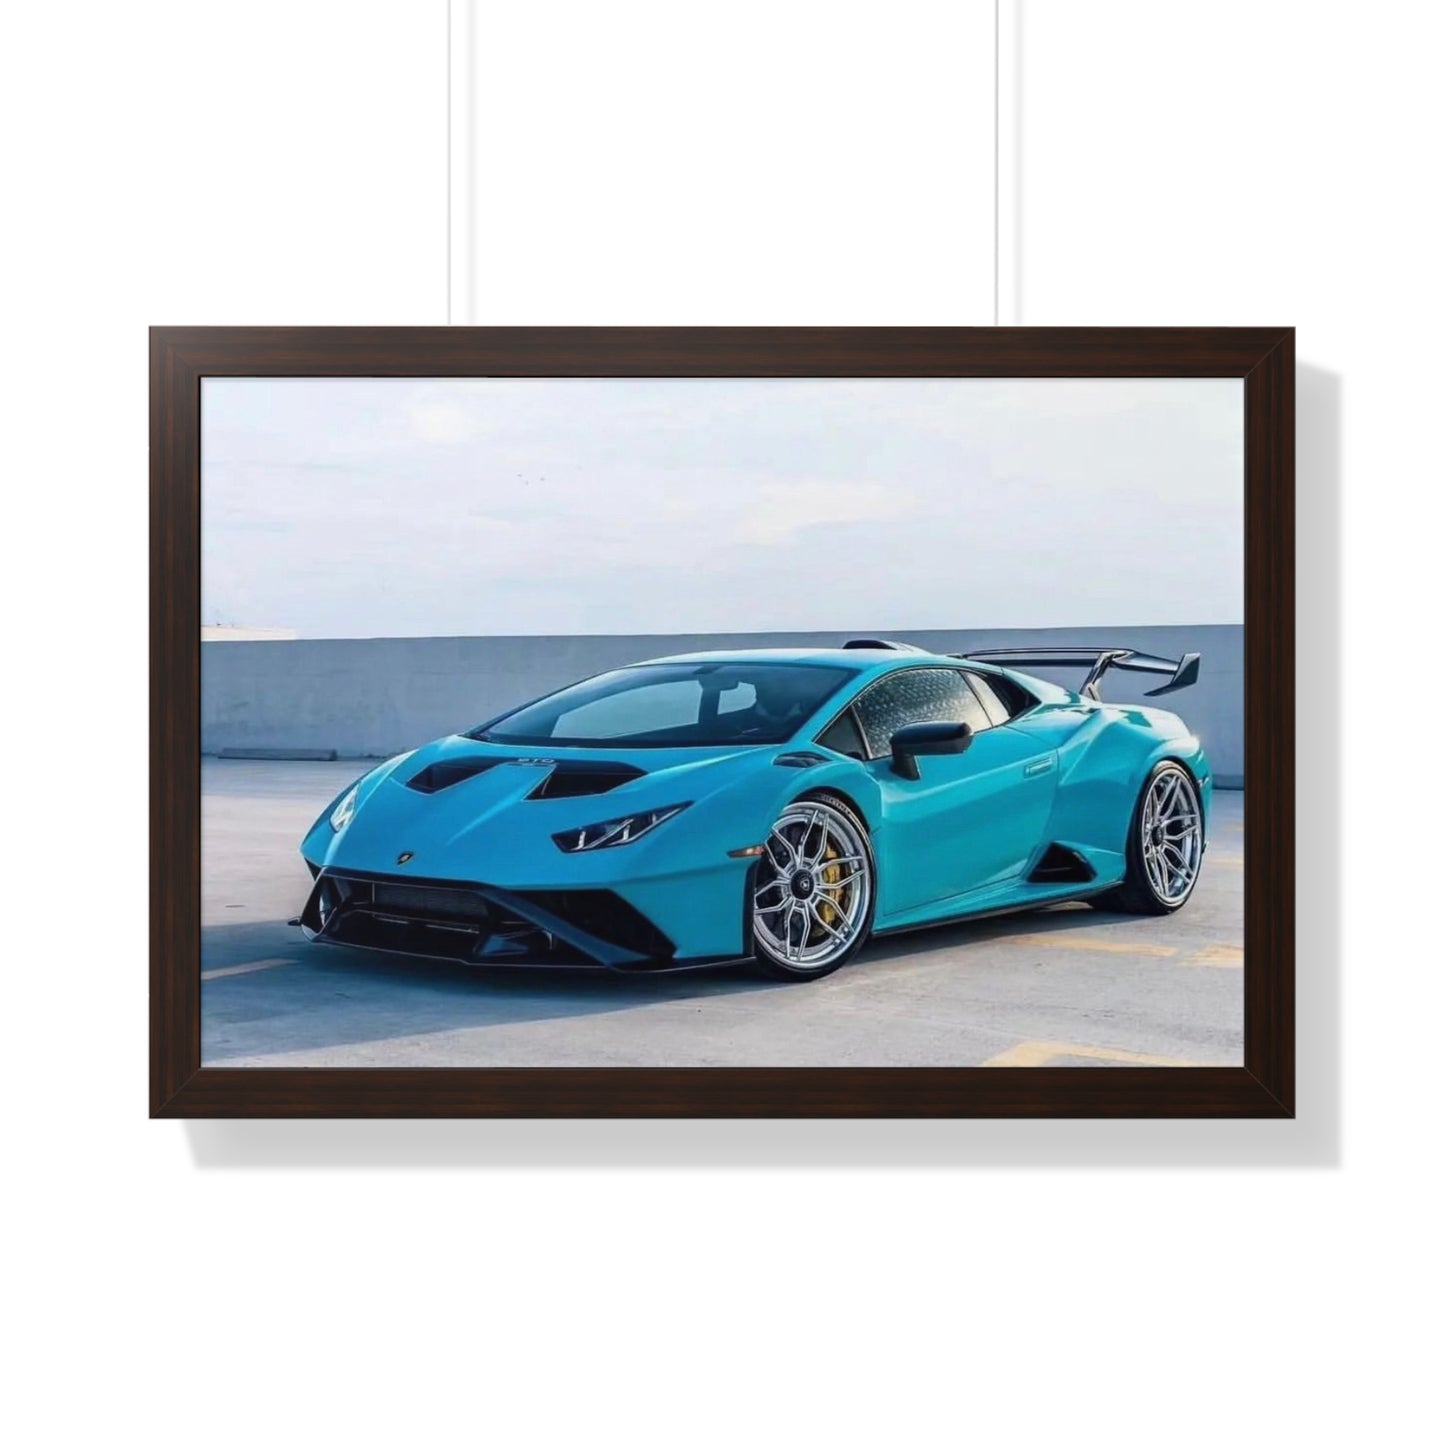 "Blue Skies" 30" x 20" Framed Lamborghini Poster